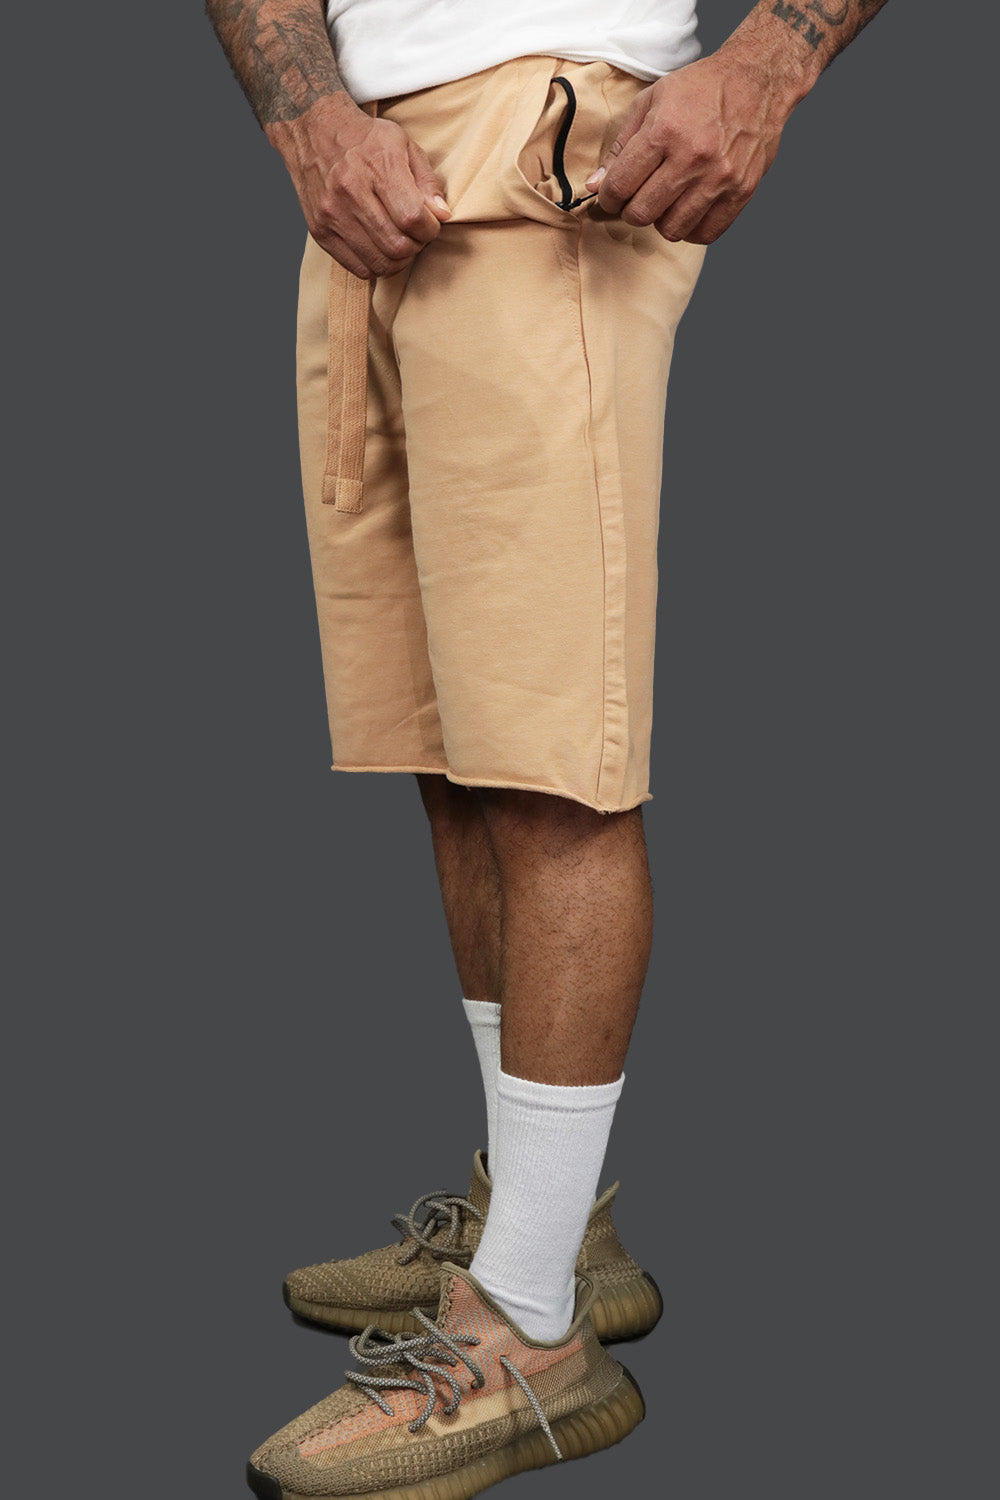 The Men’s Fleece Shorts with Zipper Pocket | Jordan Craig Clay at an angle